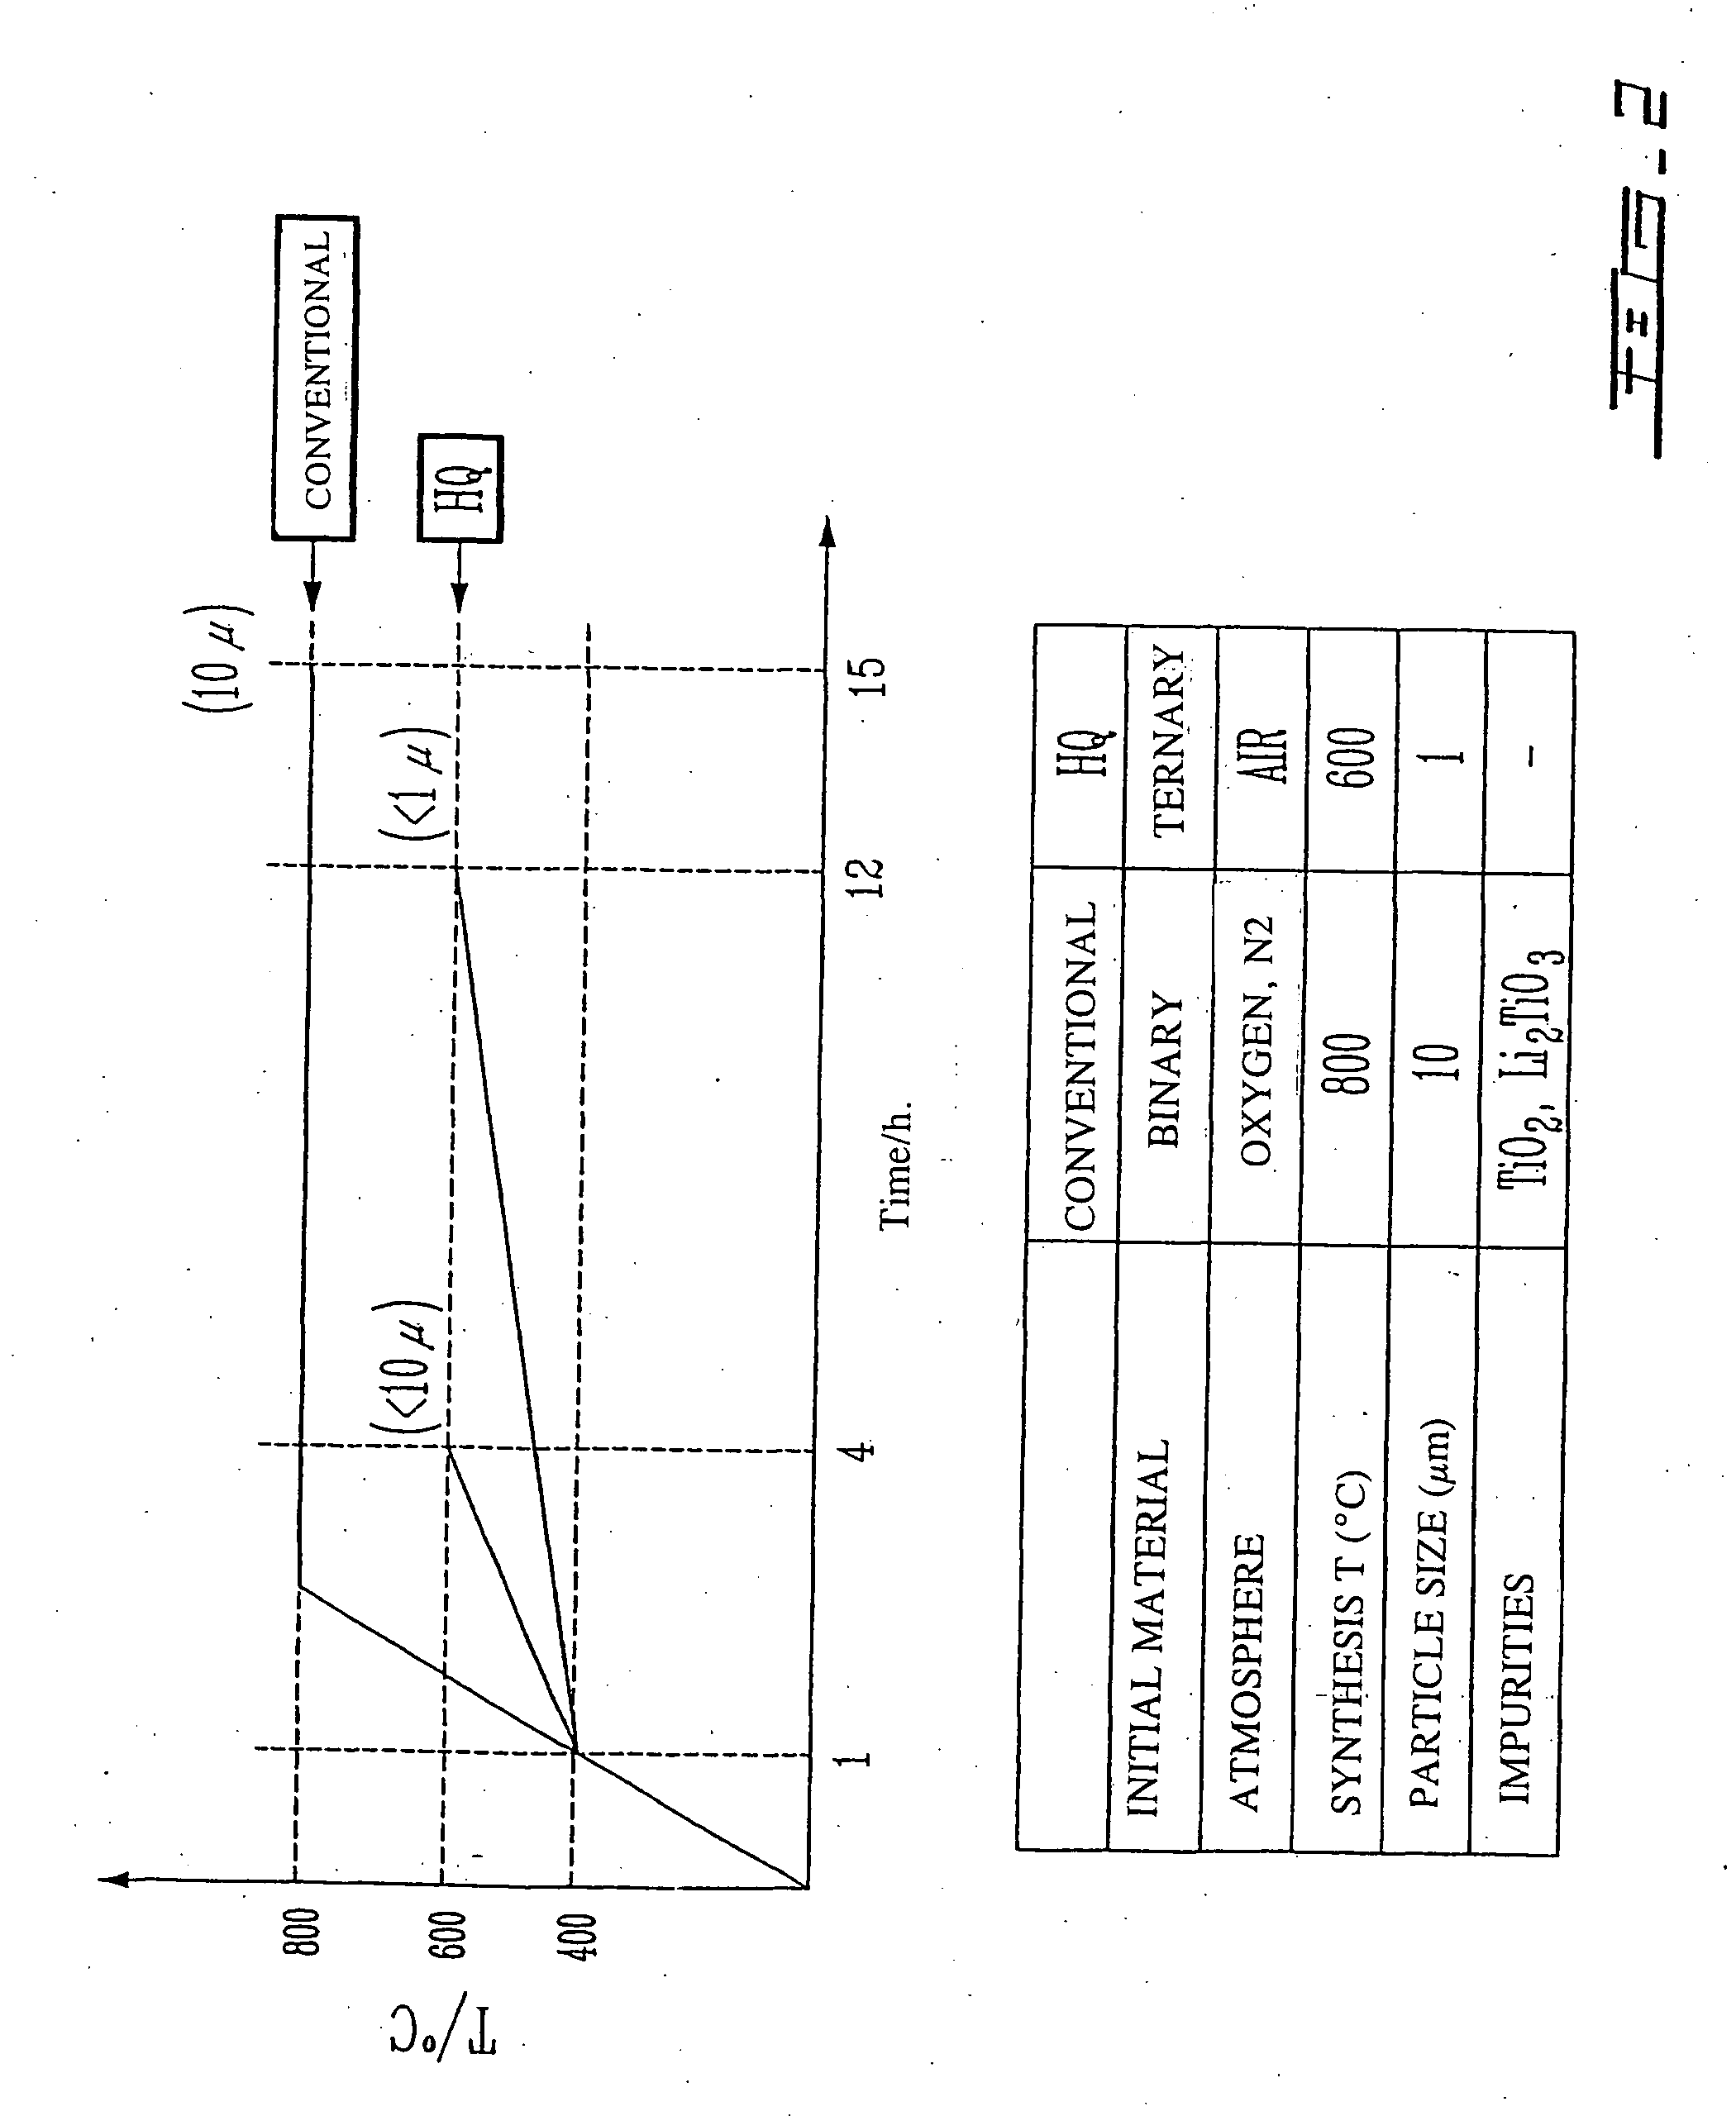 Li4Ti5O12, Li(4-alpha)Zalpha Ti5O12 or Li4ZbetaTi(5-beta)O12 particles, processes for obtaining same and use as electrochemical generators